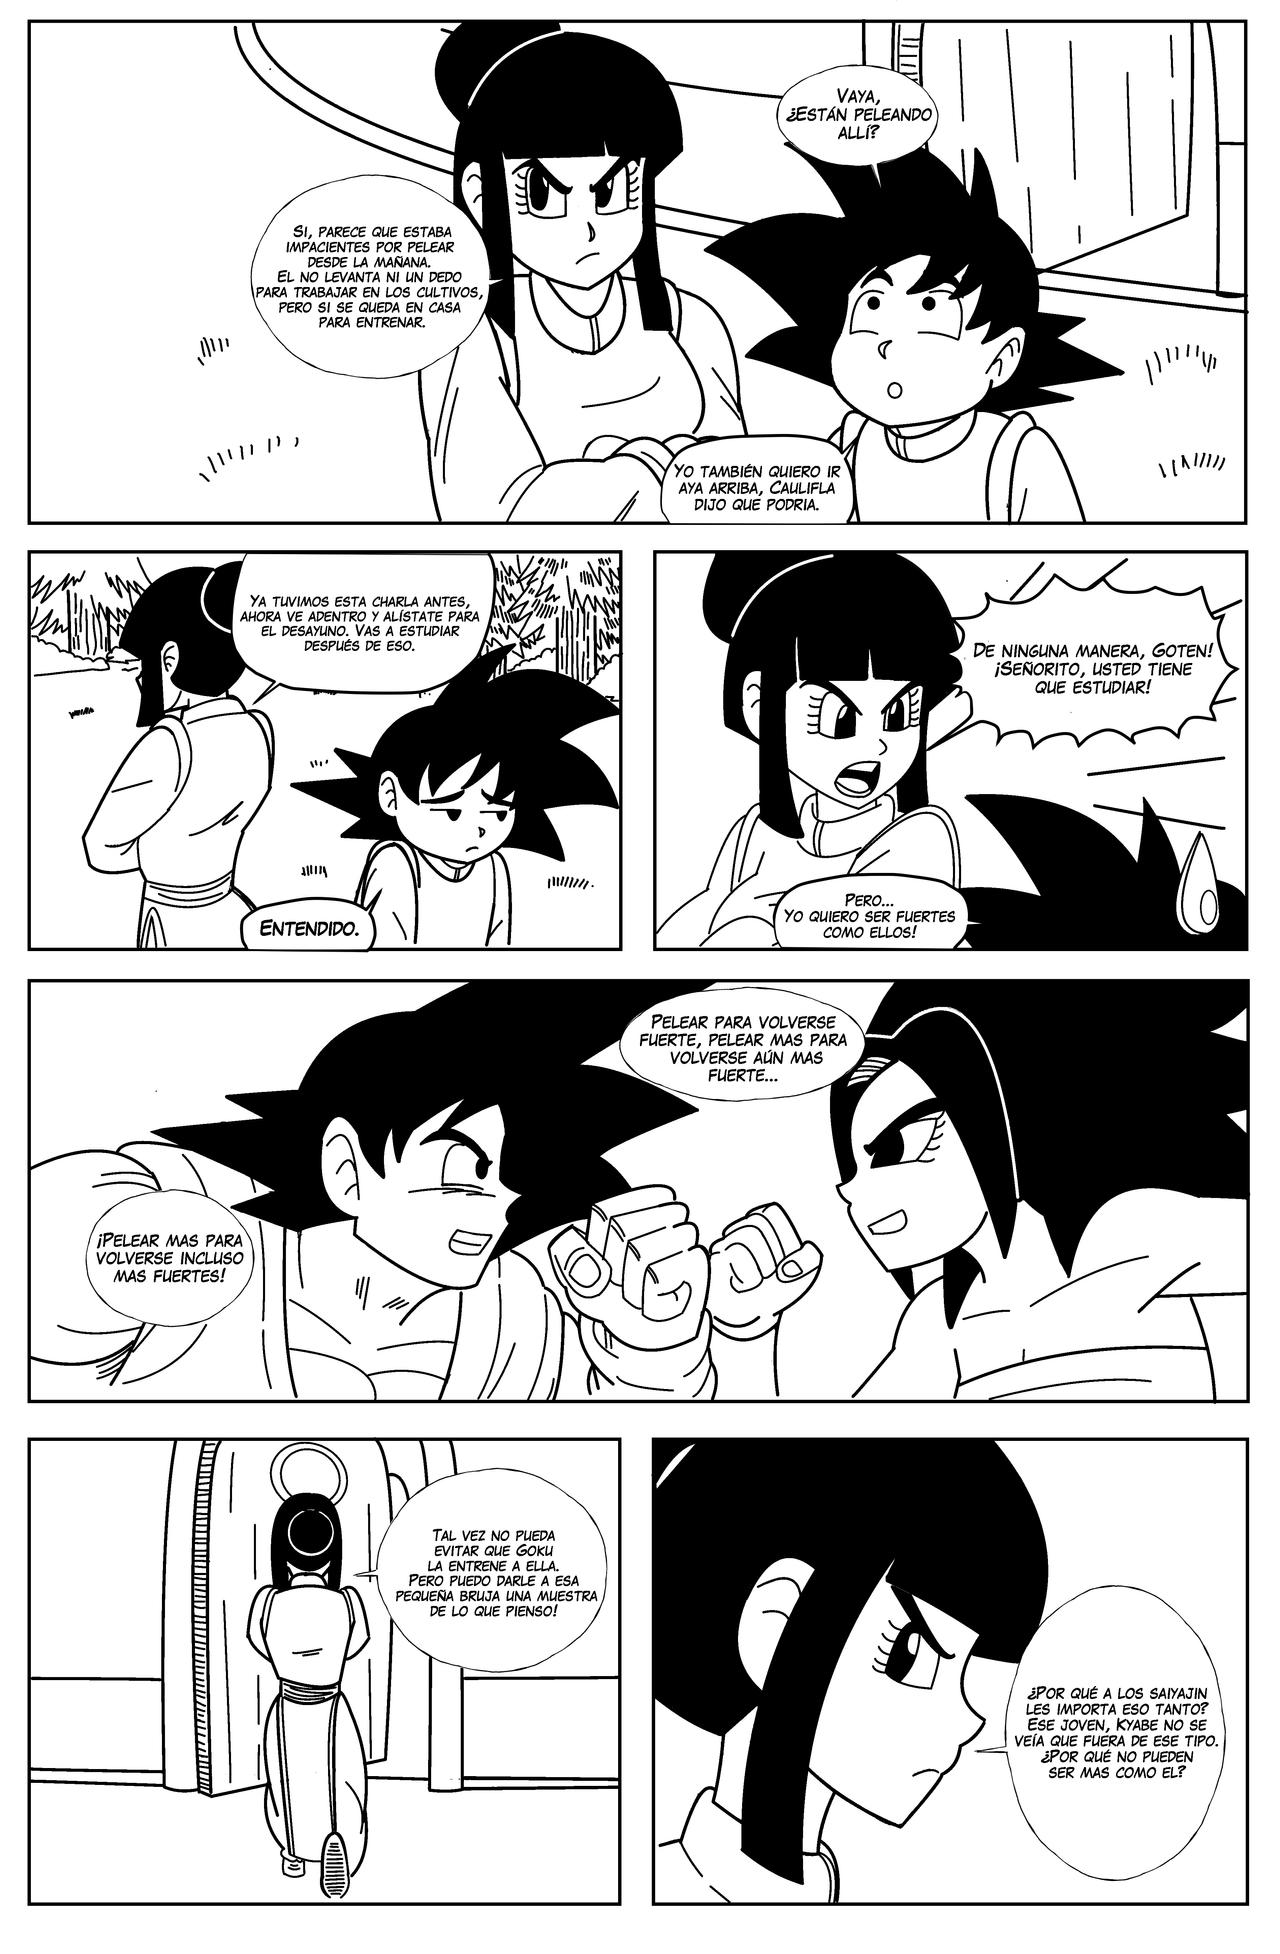 Dragonball:GTH(A Goku X Caulifla Story)ESPANOLP103 by chumpchangedraws on  DeviantArt